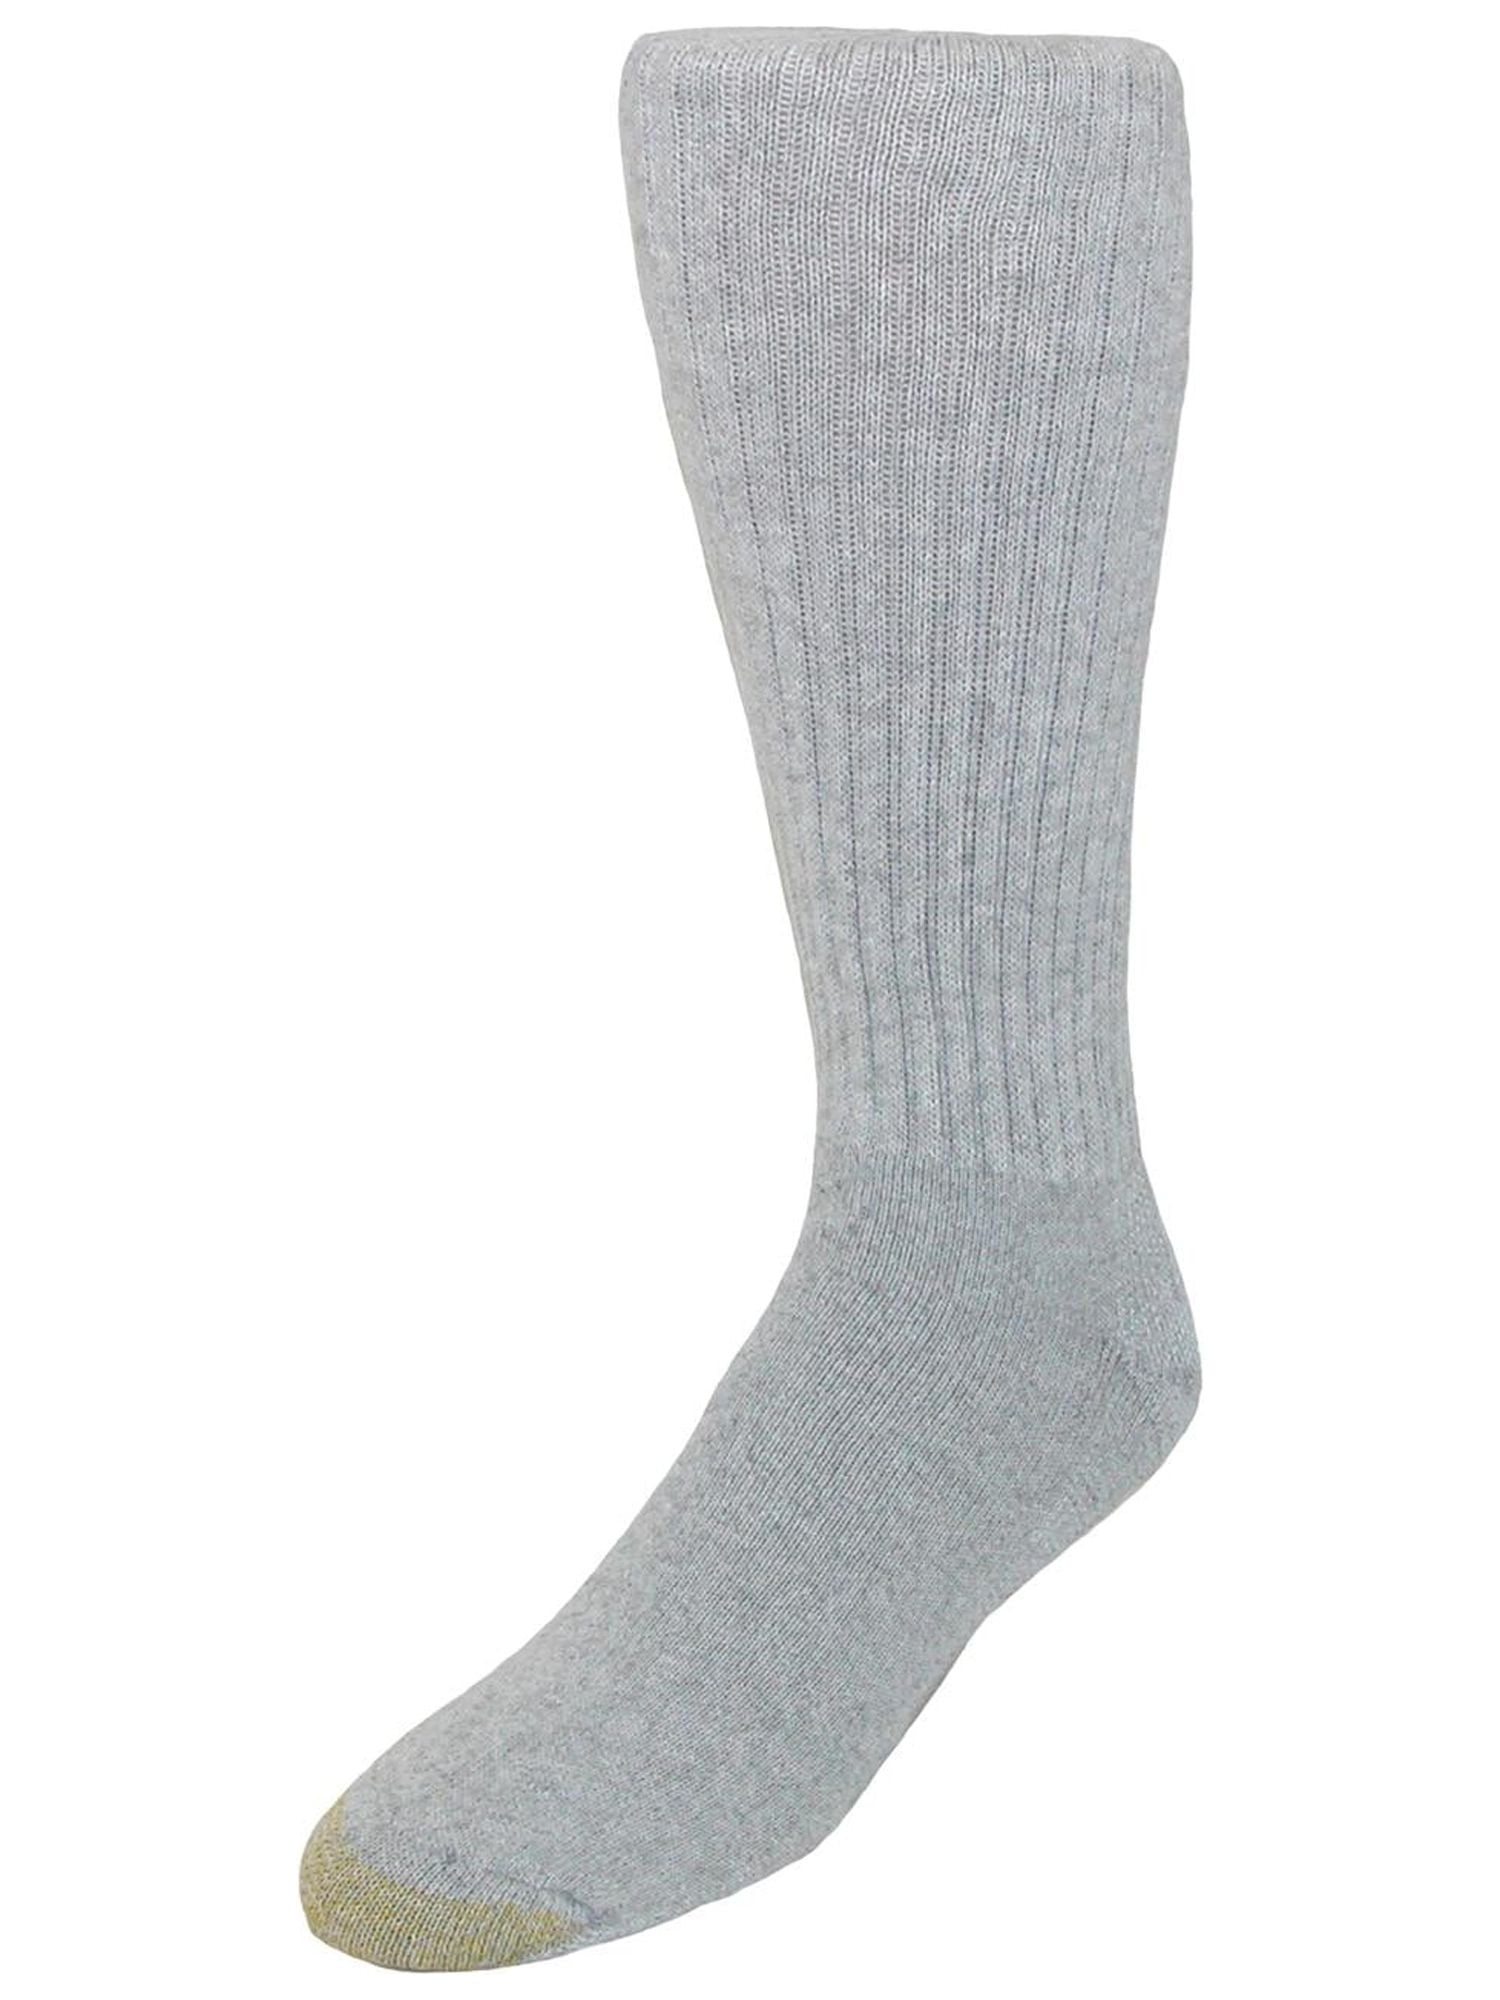 VERONZ Gold Toe Men's Ultra Tec Cotton Over-the-Calf Athletic Socks Sock  Clips Included